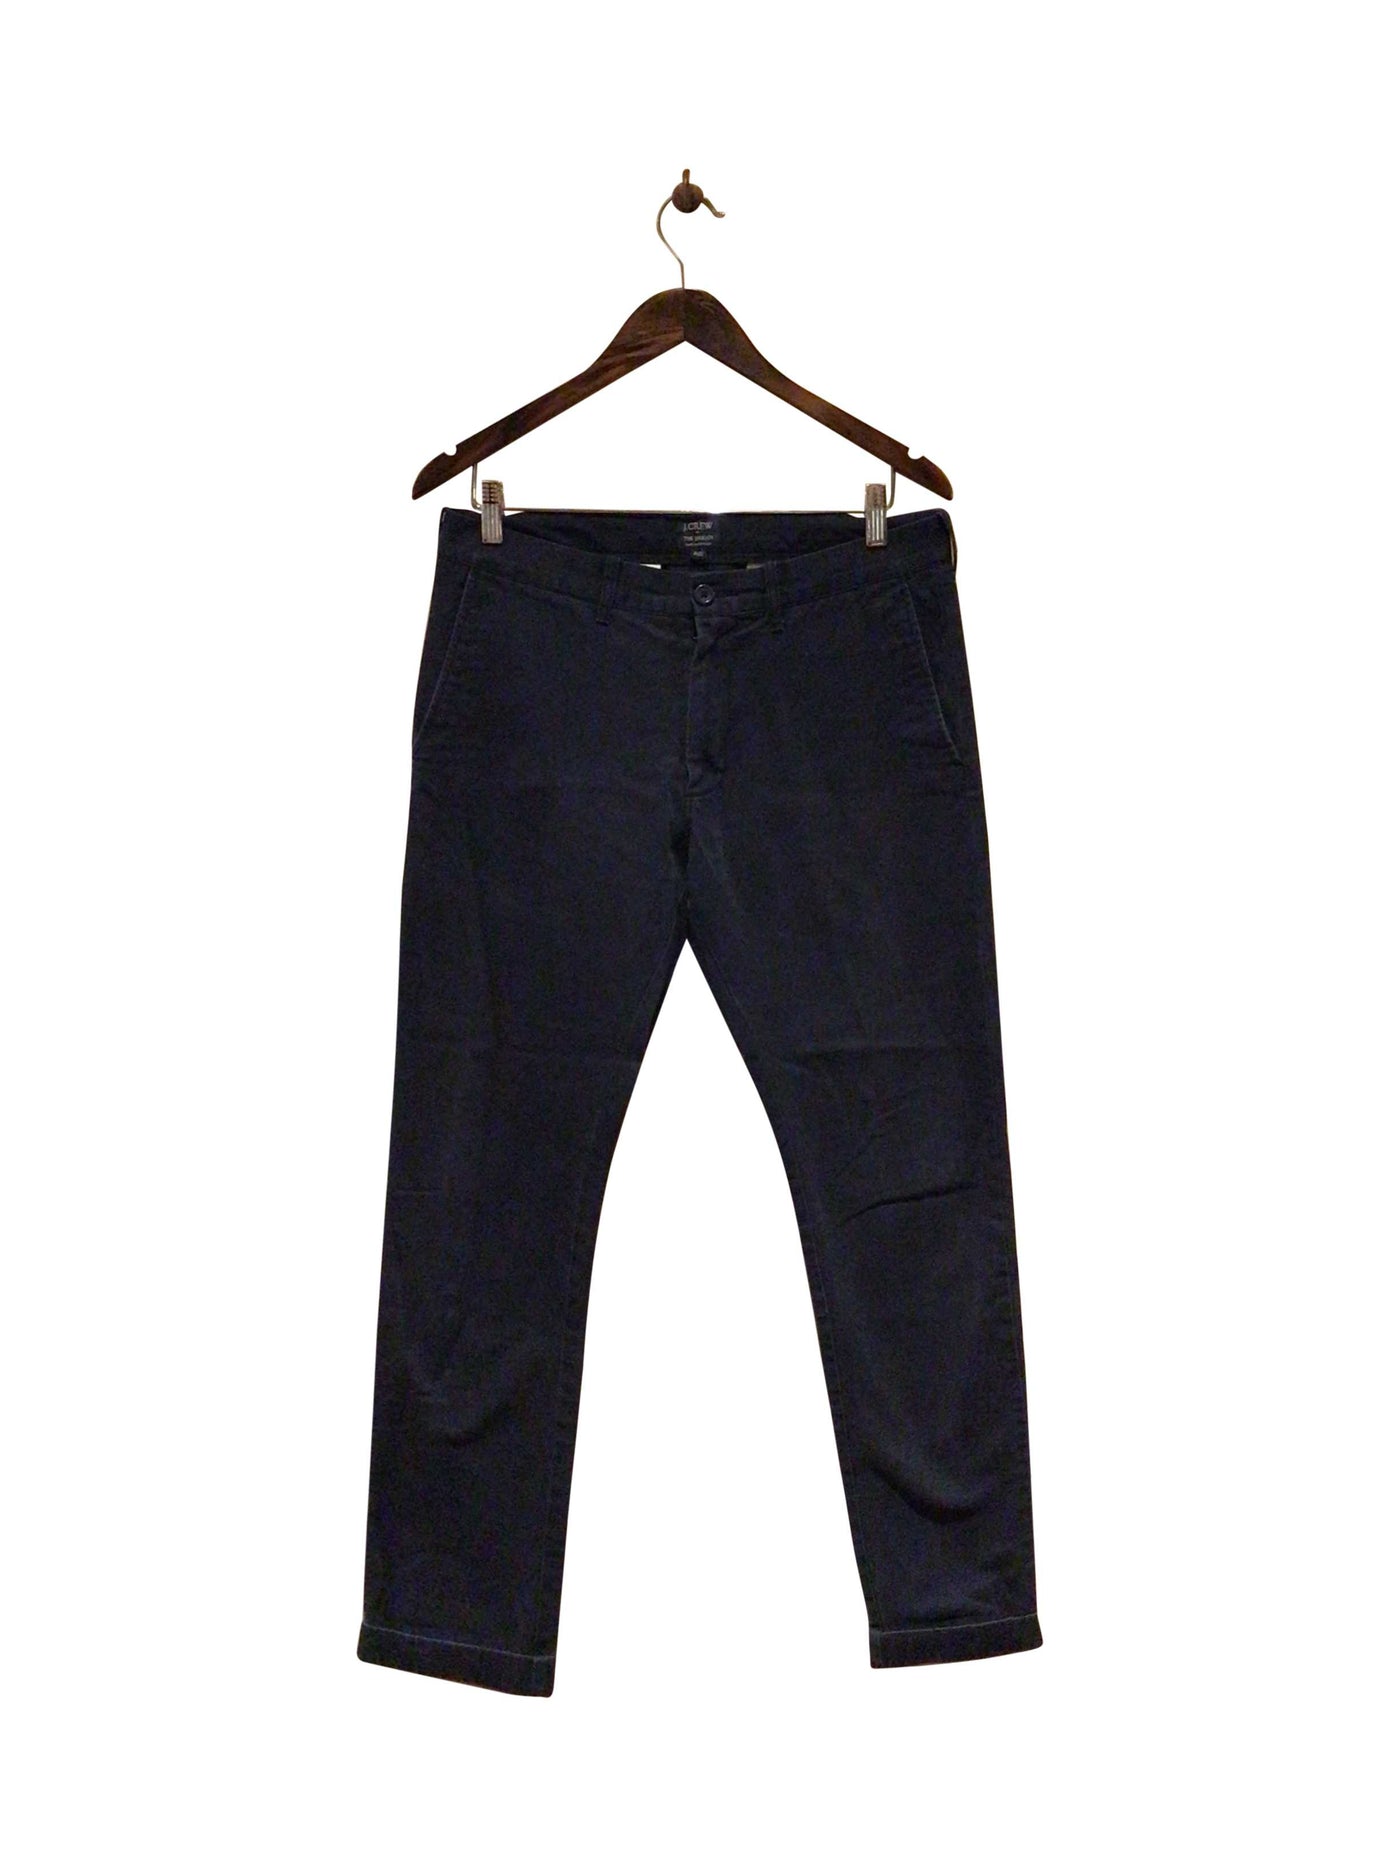 J. CREW Regular fit Pant in Black  -  31x32  20.99 Koop